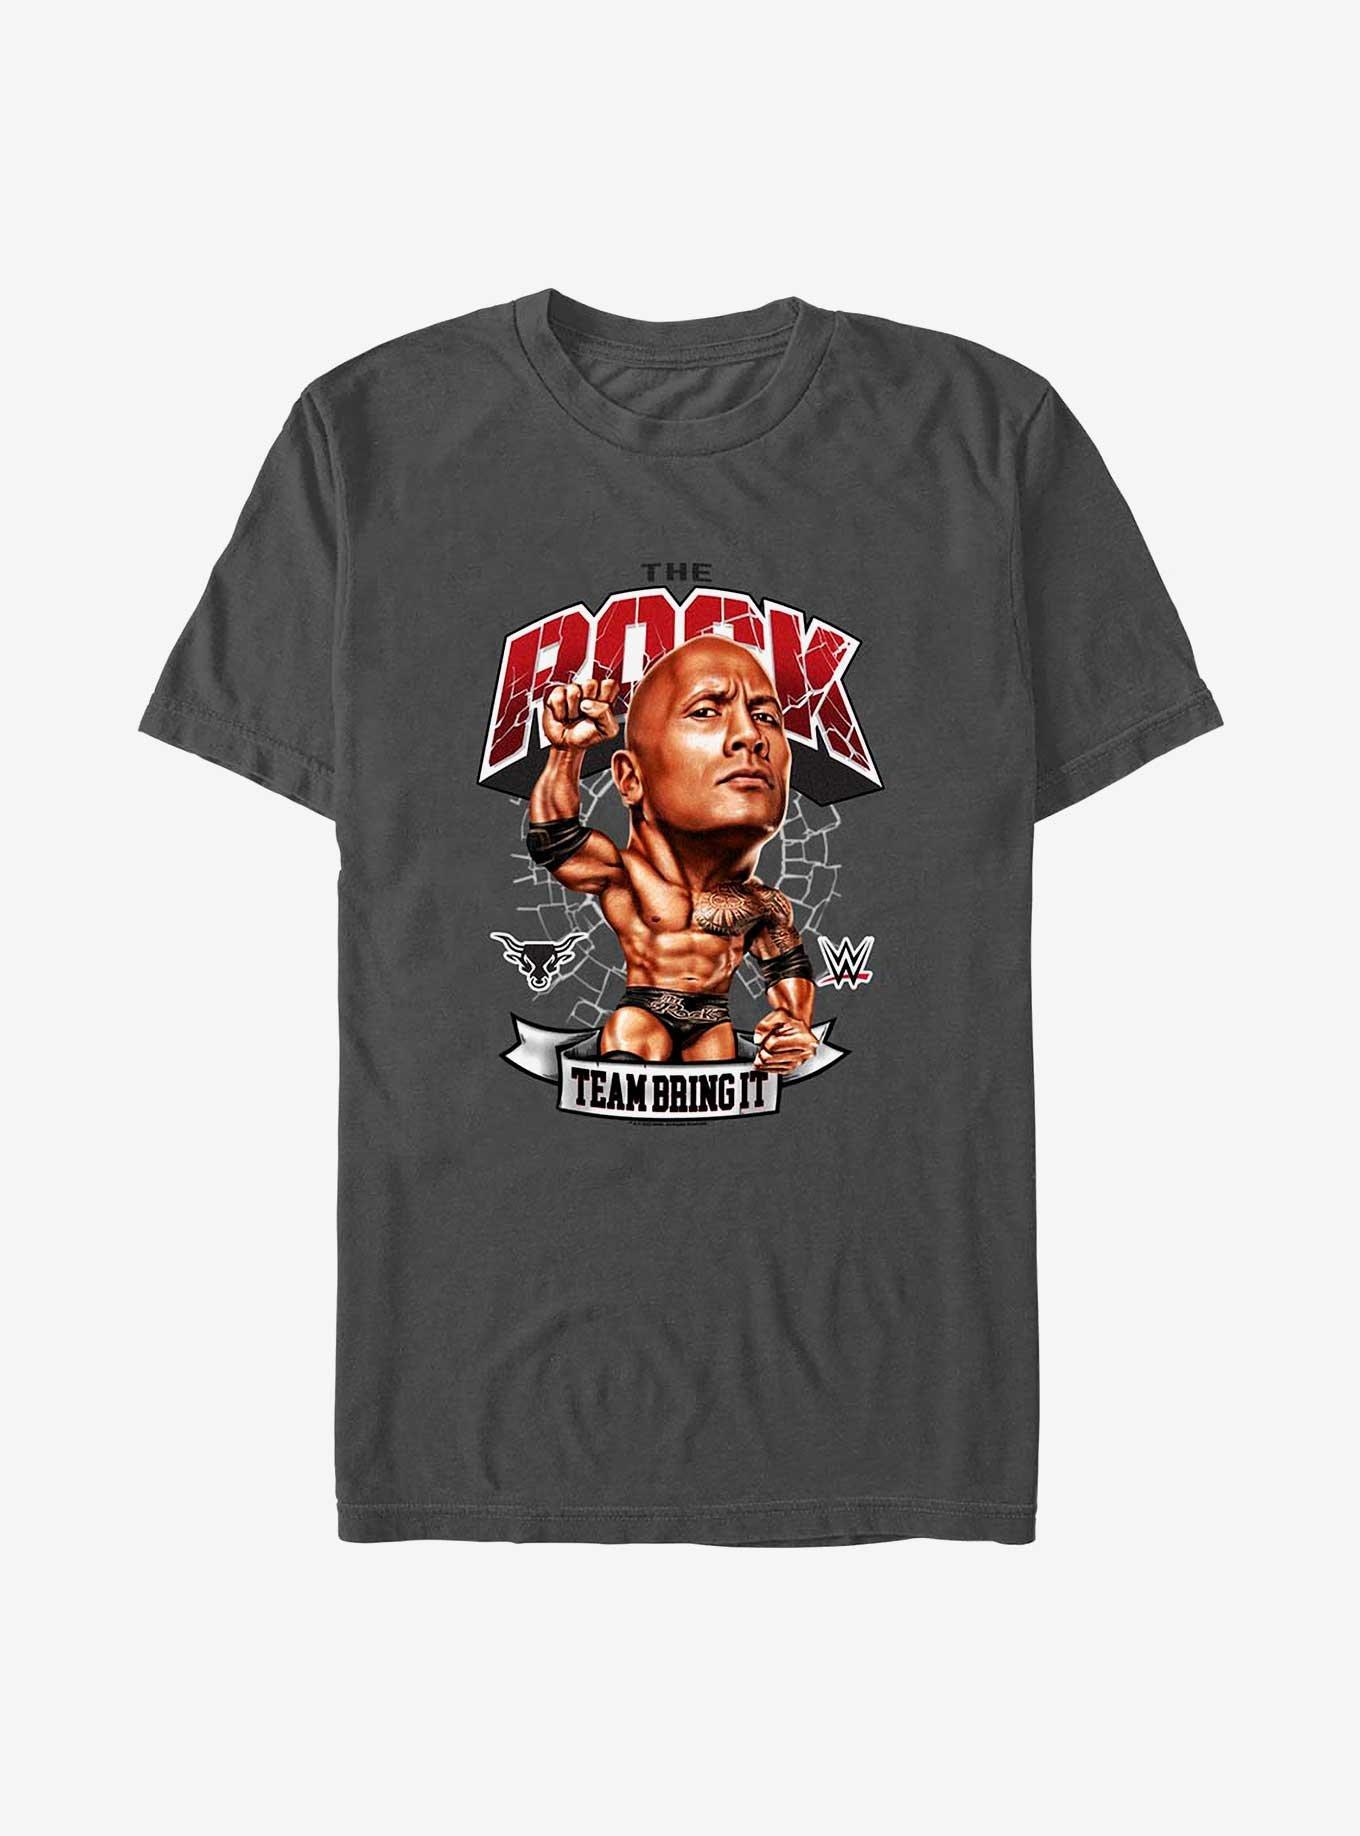 Rafflesia Arnoldi Du bliver bedre tynd WWE The Rock Team Bring It T-Shirt - GREY | Hot Topic